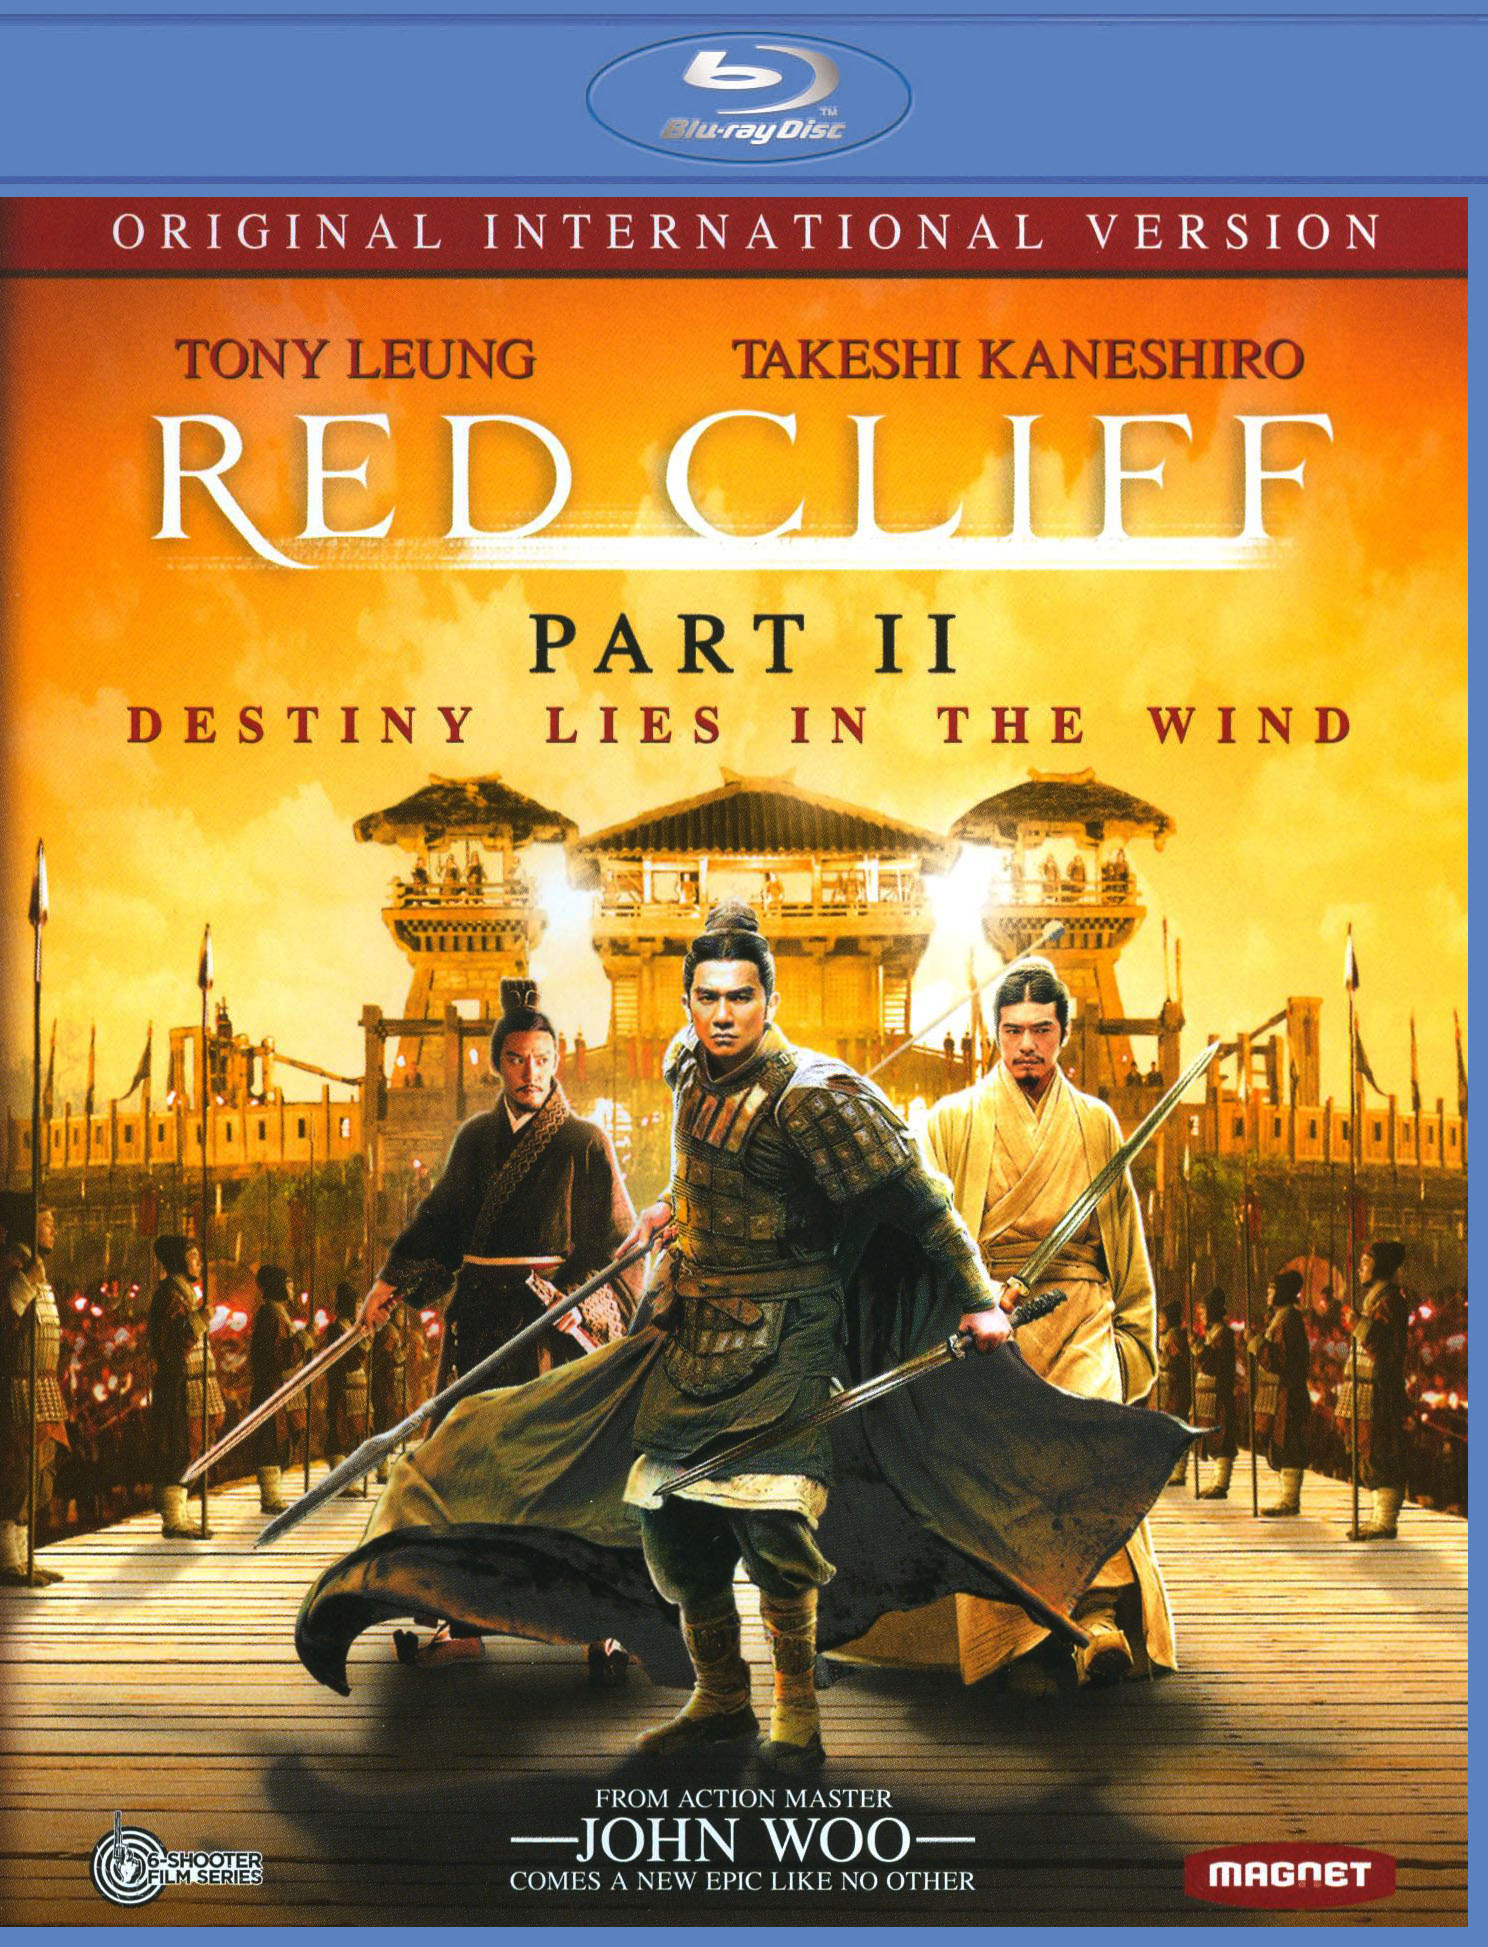 Red Part II [Original International Version] [Blu-ray] [2009] Best Buy